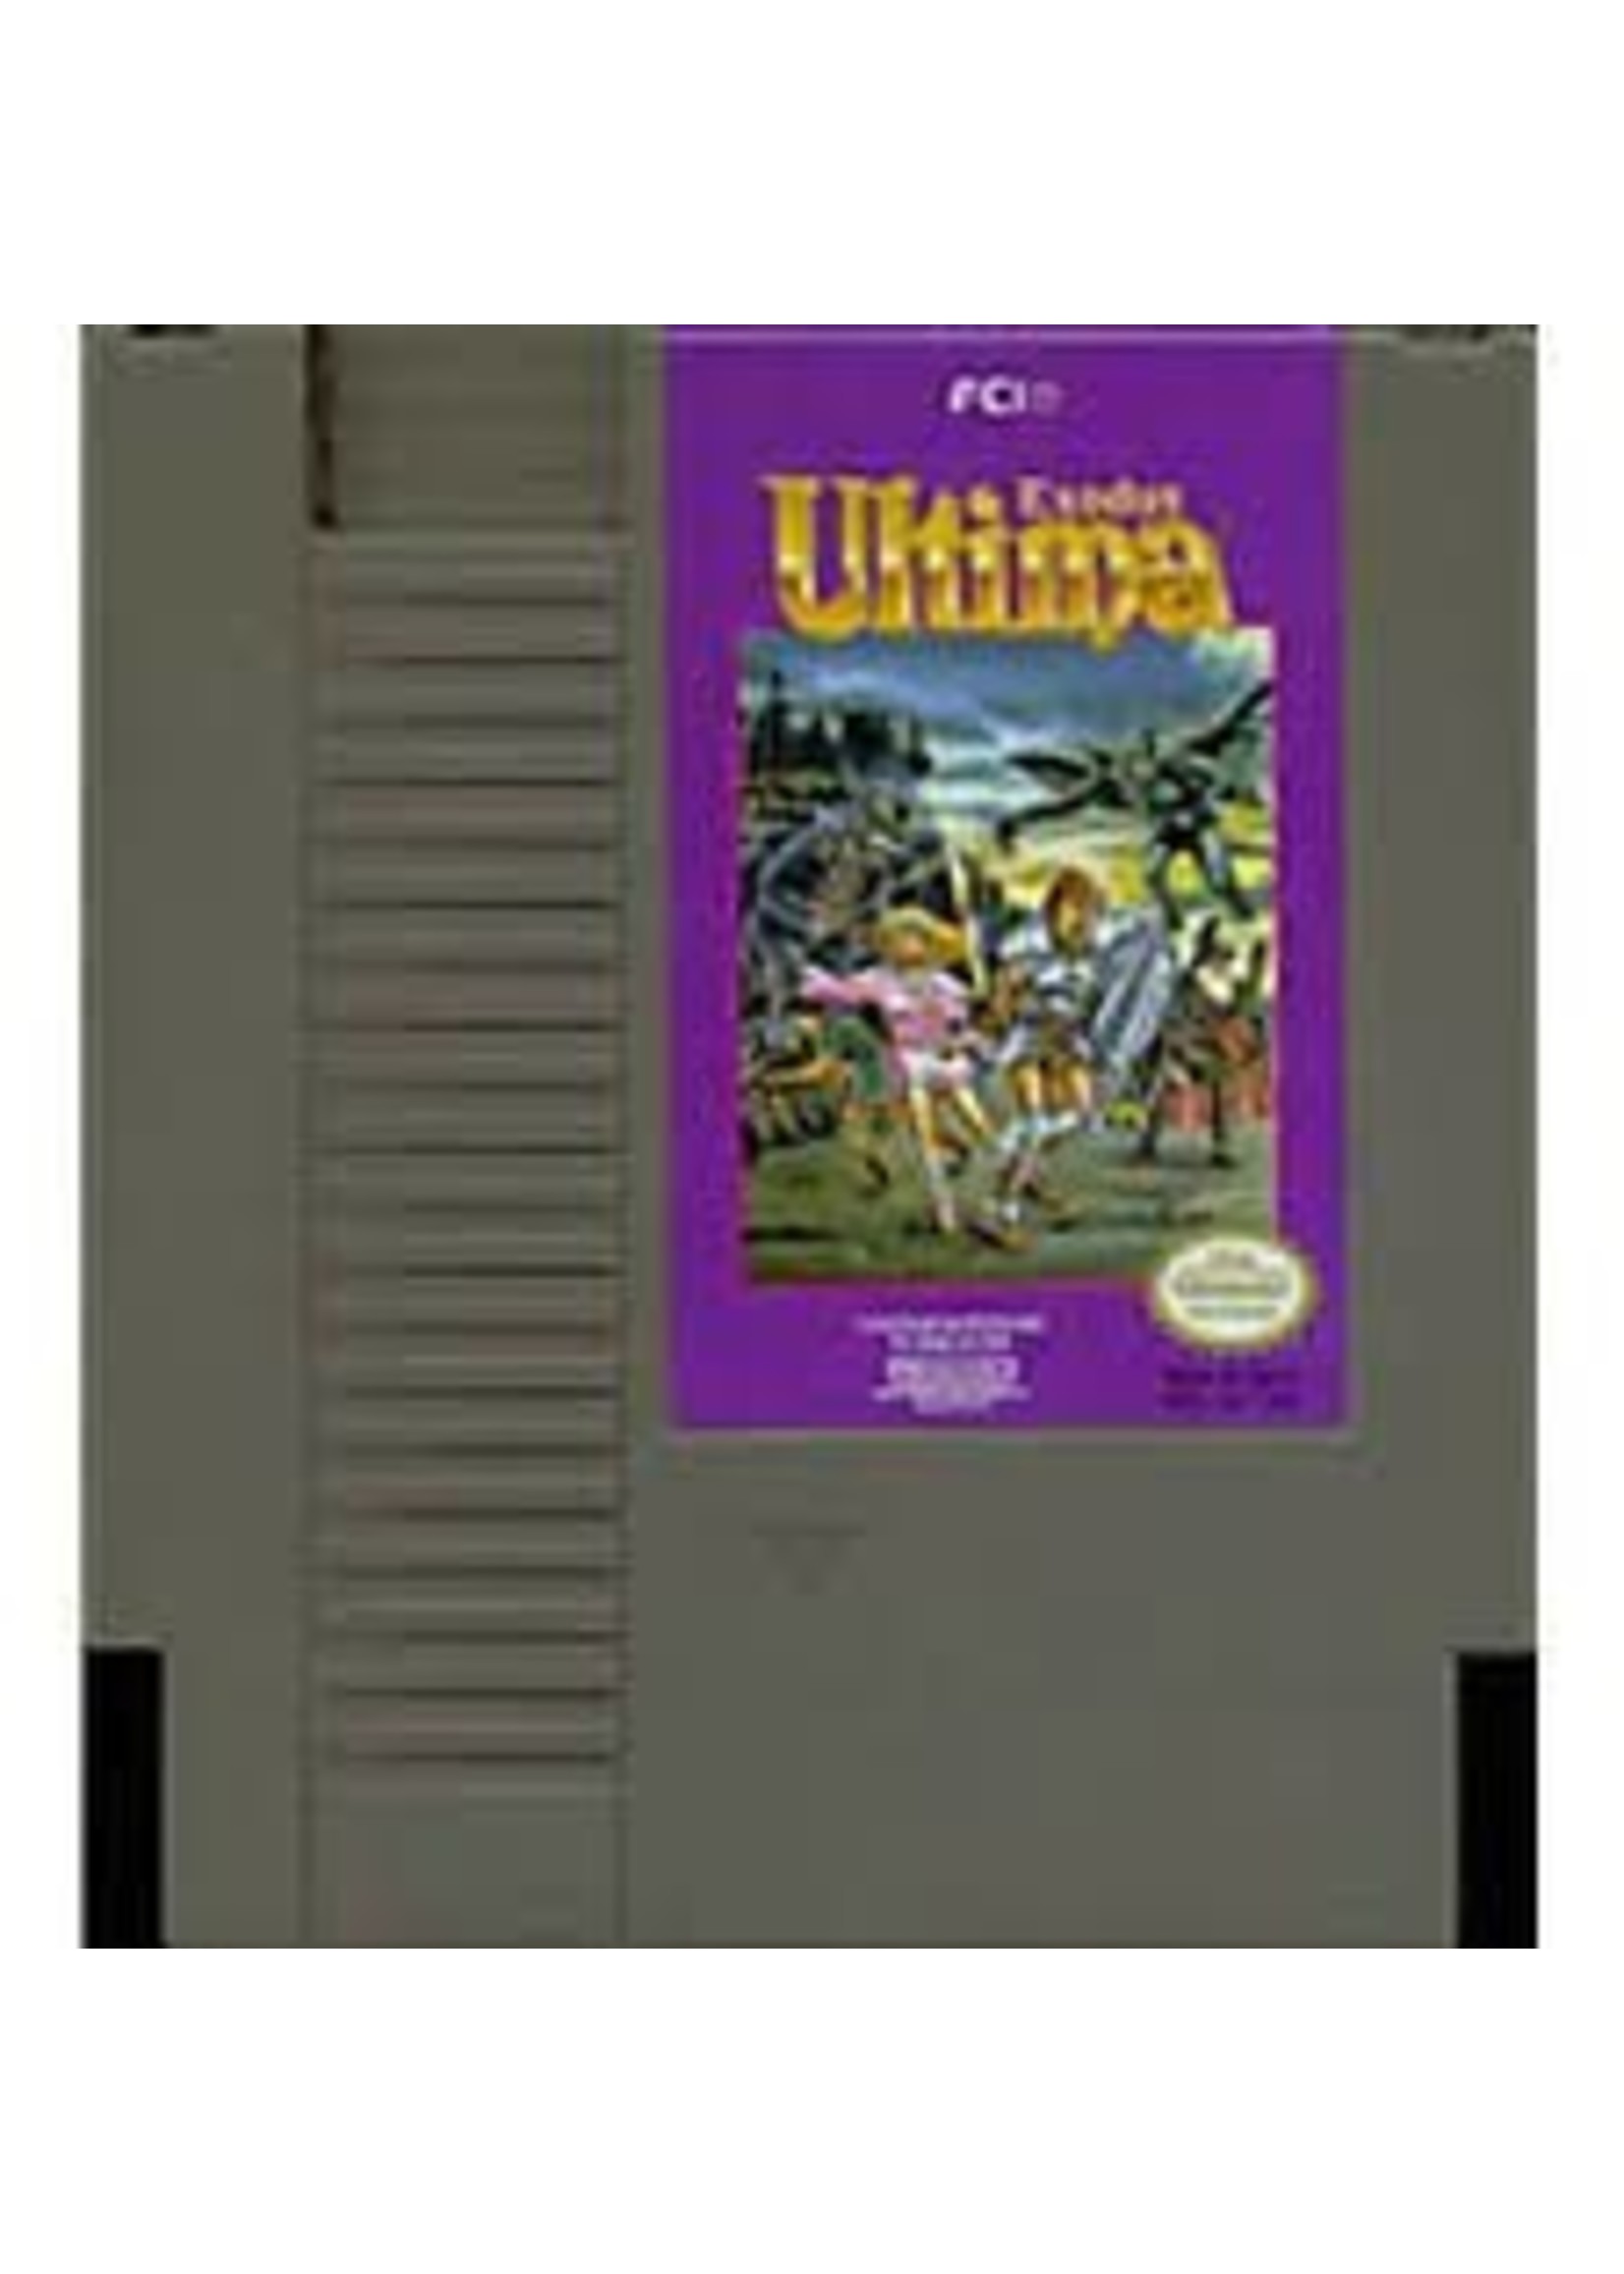 Nintendo (NES) Ultima Exodus W/Manual